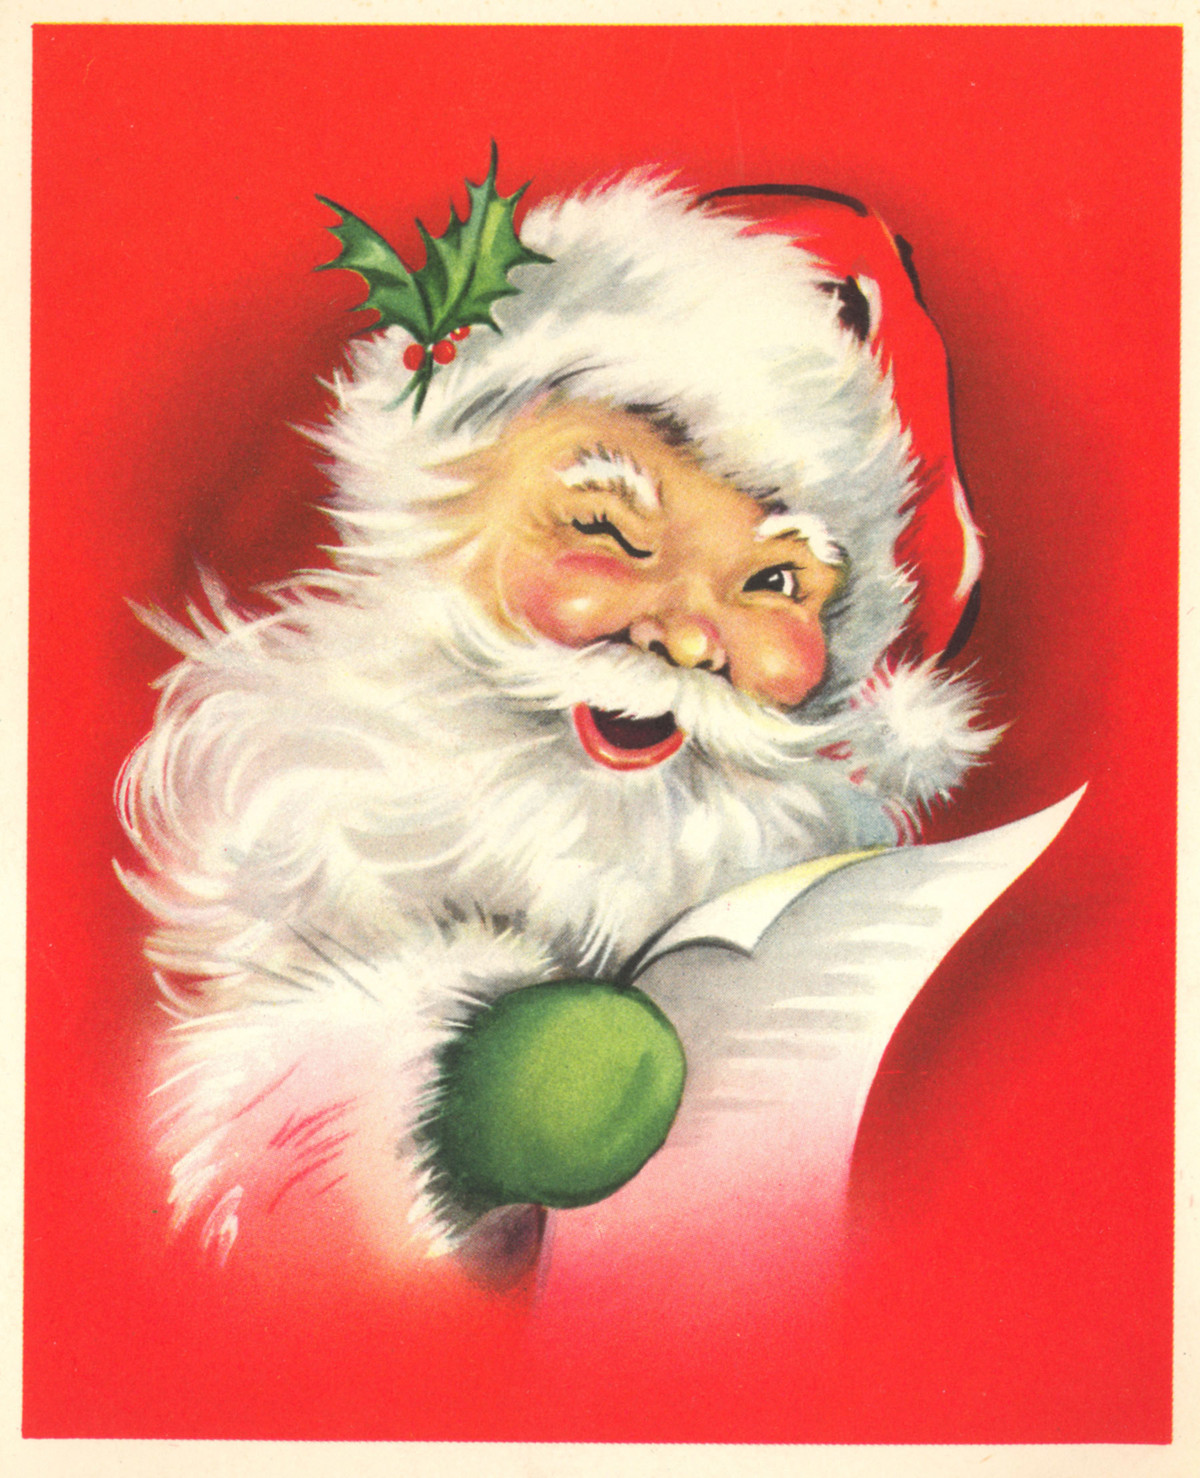 Santa Claus with his list